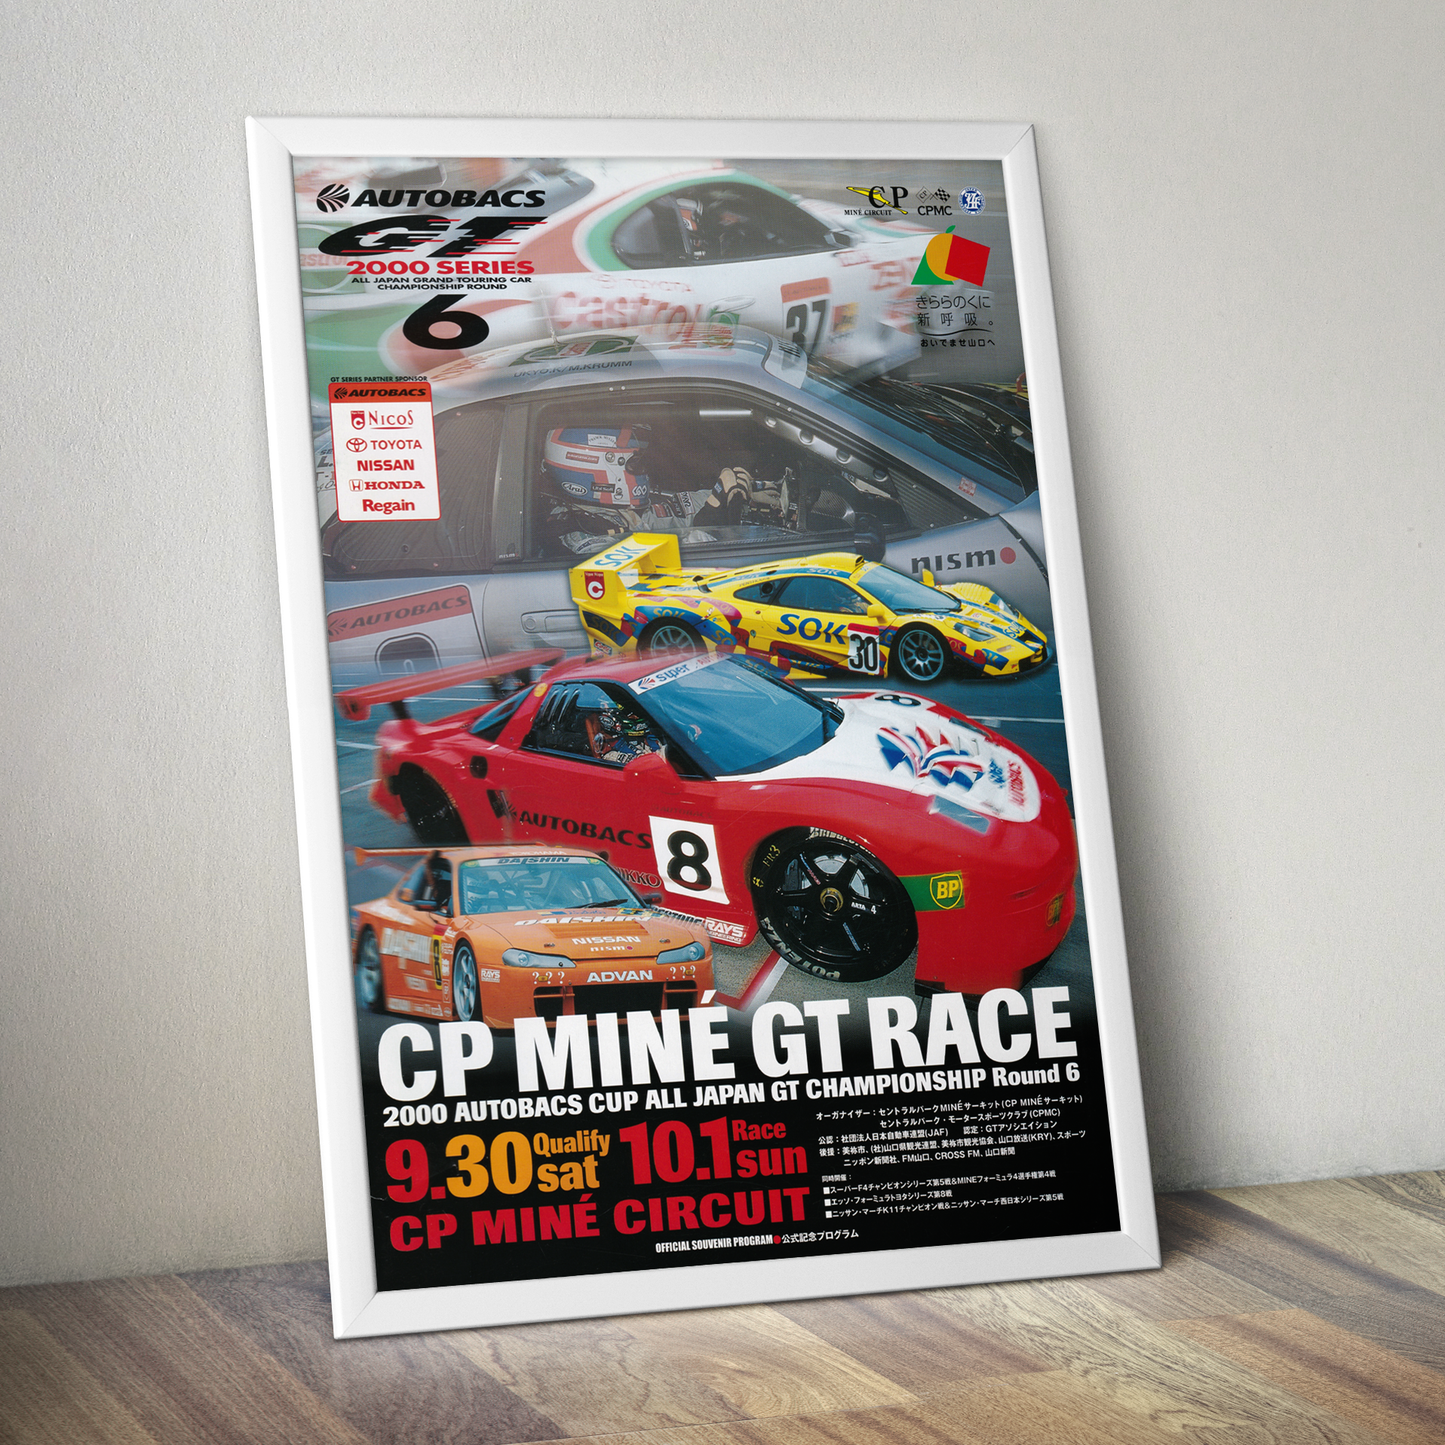 Cp Mine Gt Race 2000 AUTOBACS poster